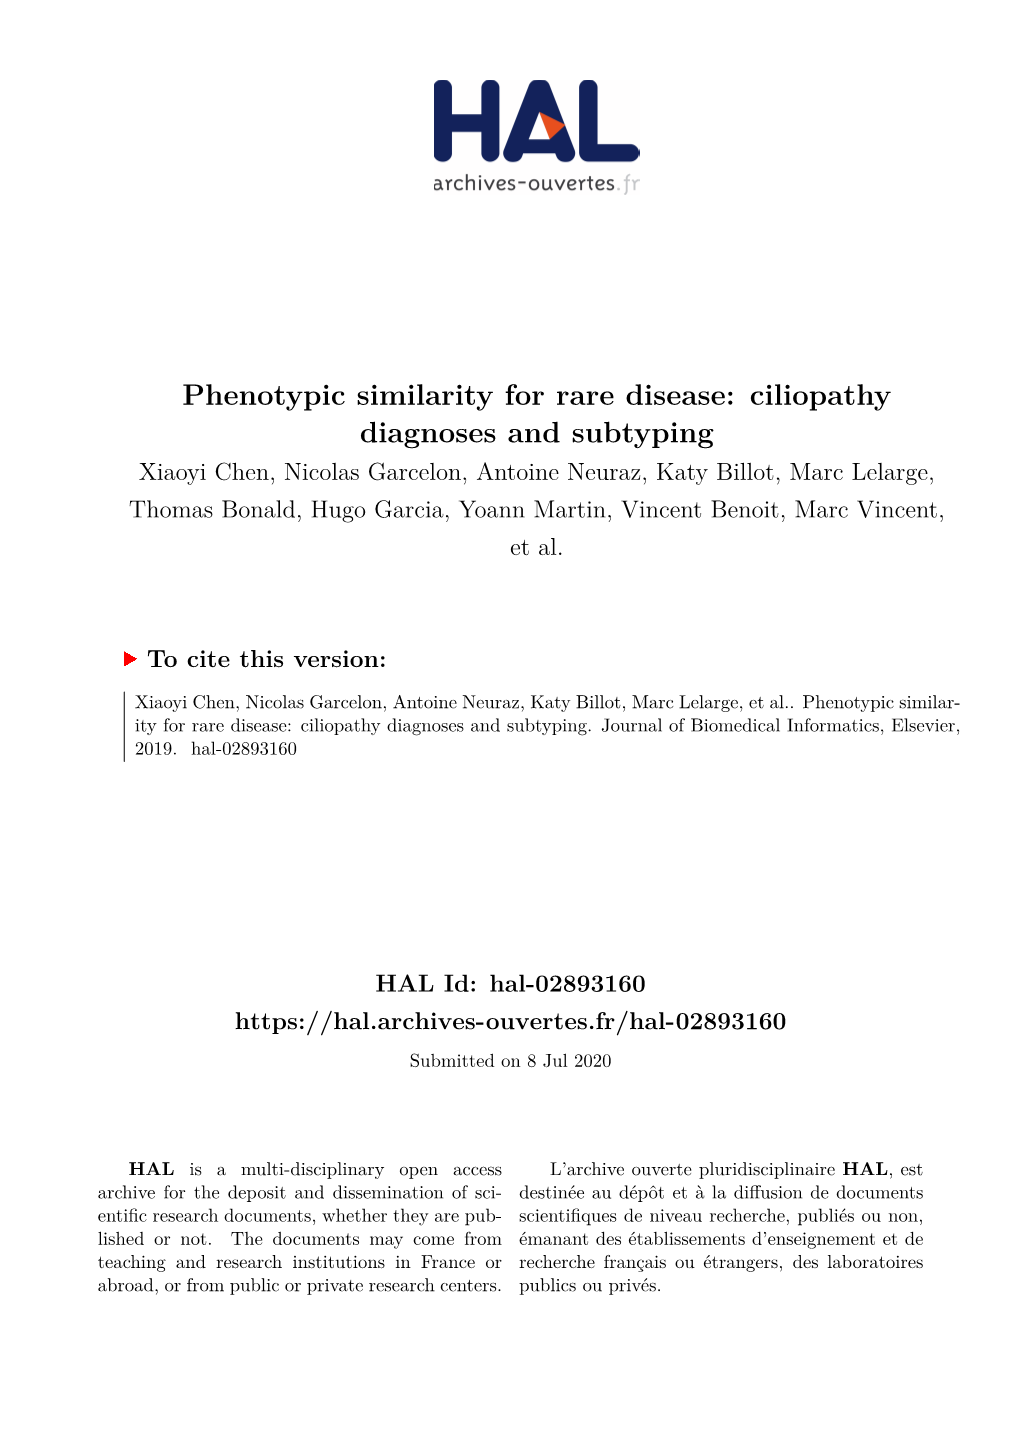 Phenotypic Similarity for Rare Disease